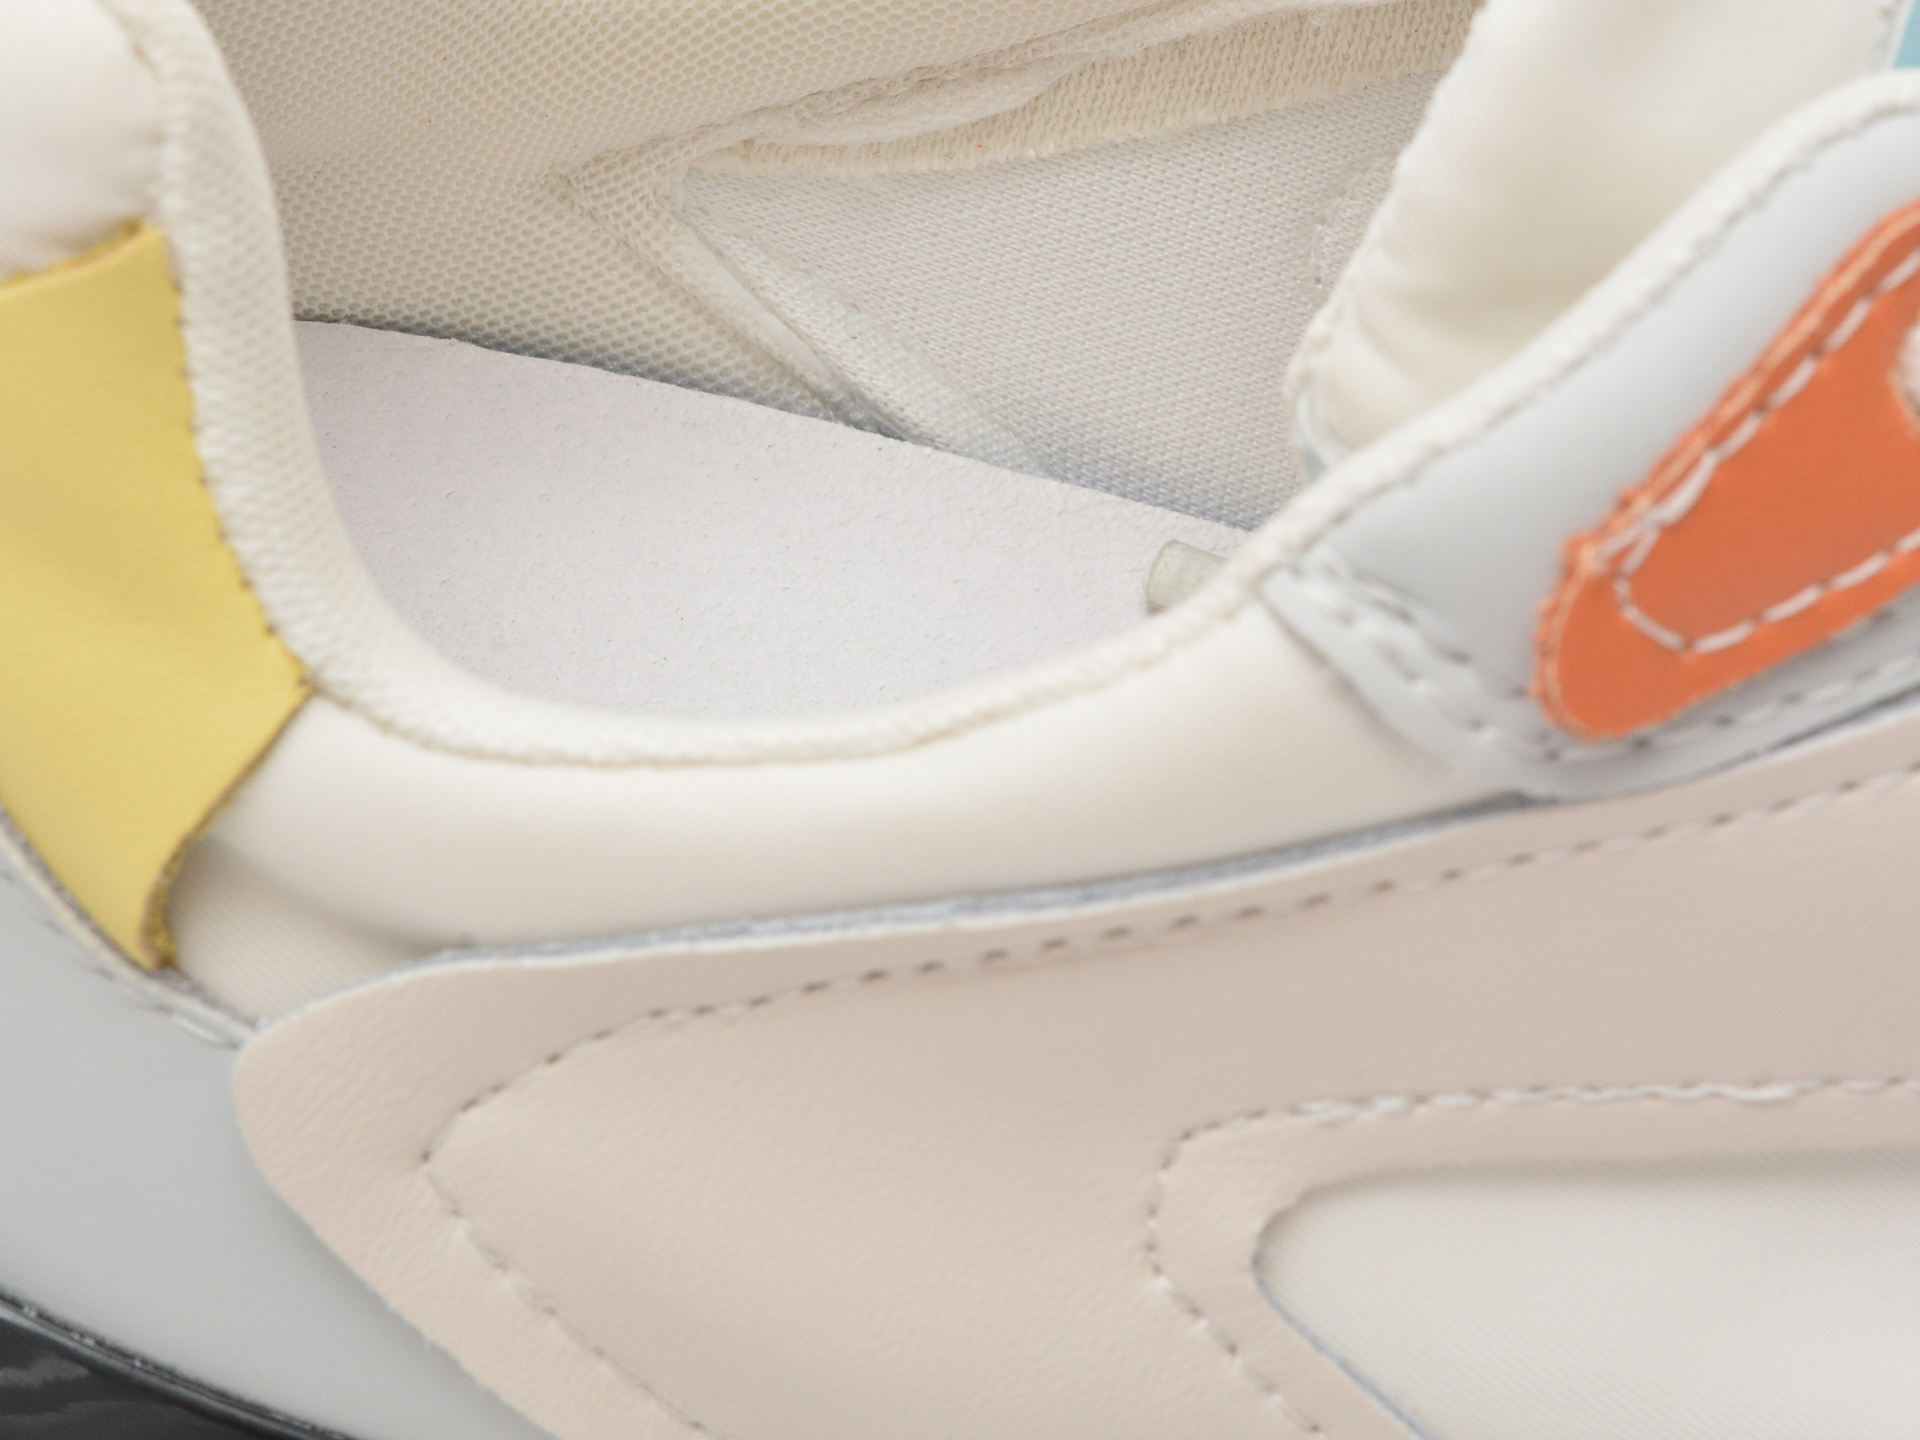 Poze Pantofi sport EPICA multicolori, 895, din material textil si piele naturala